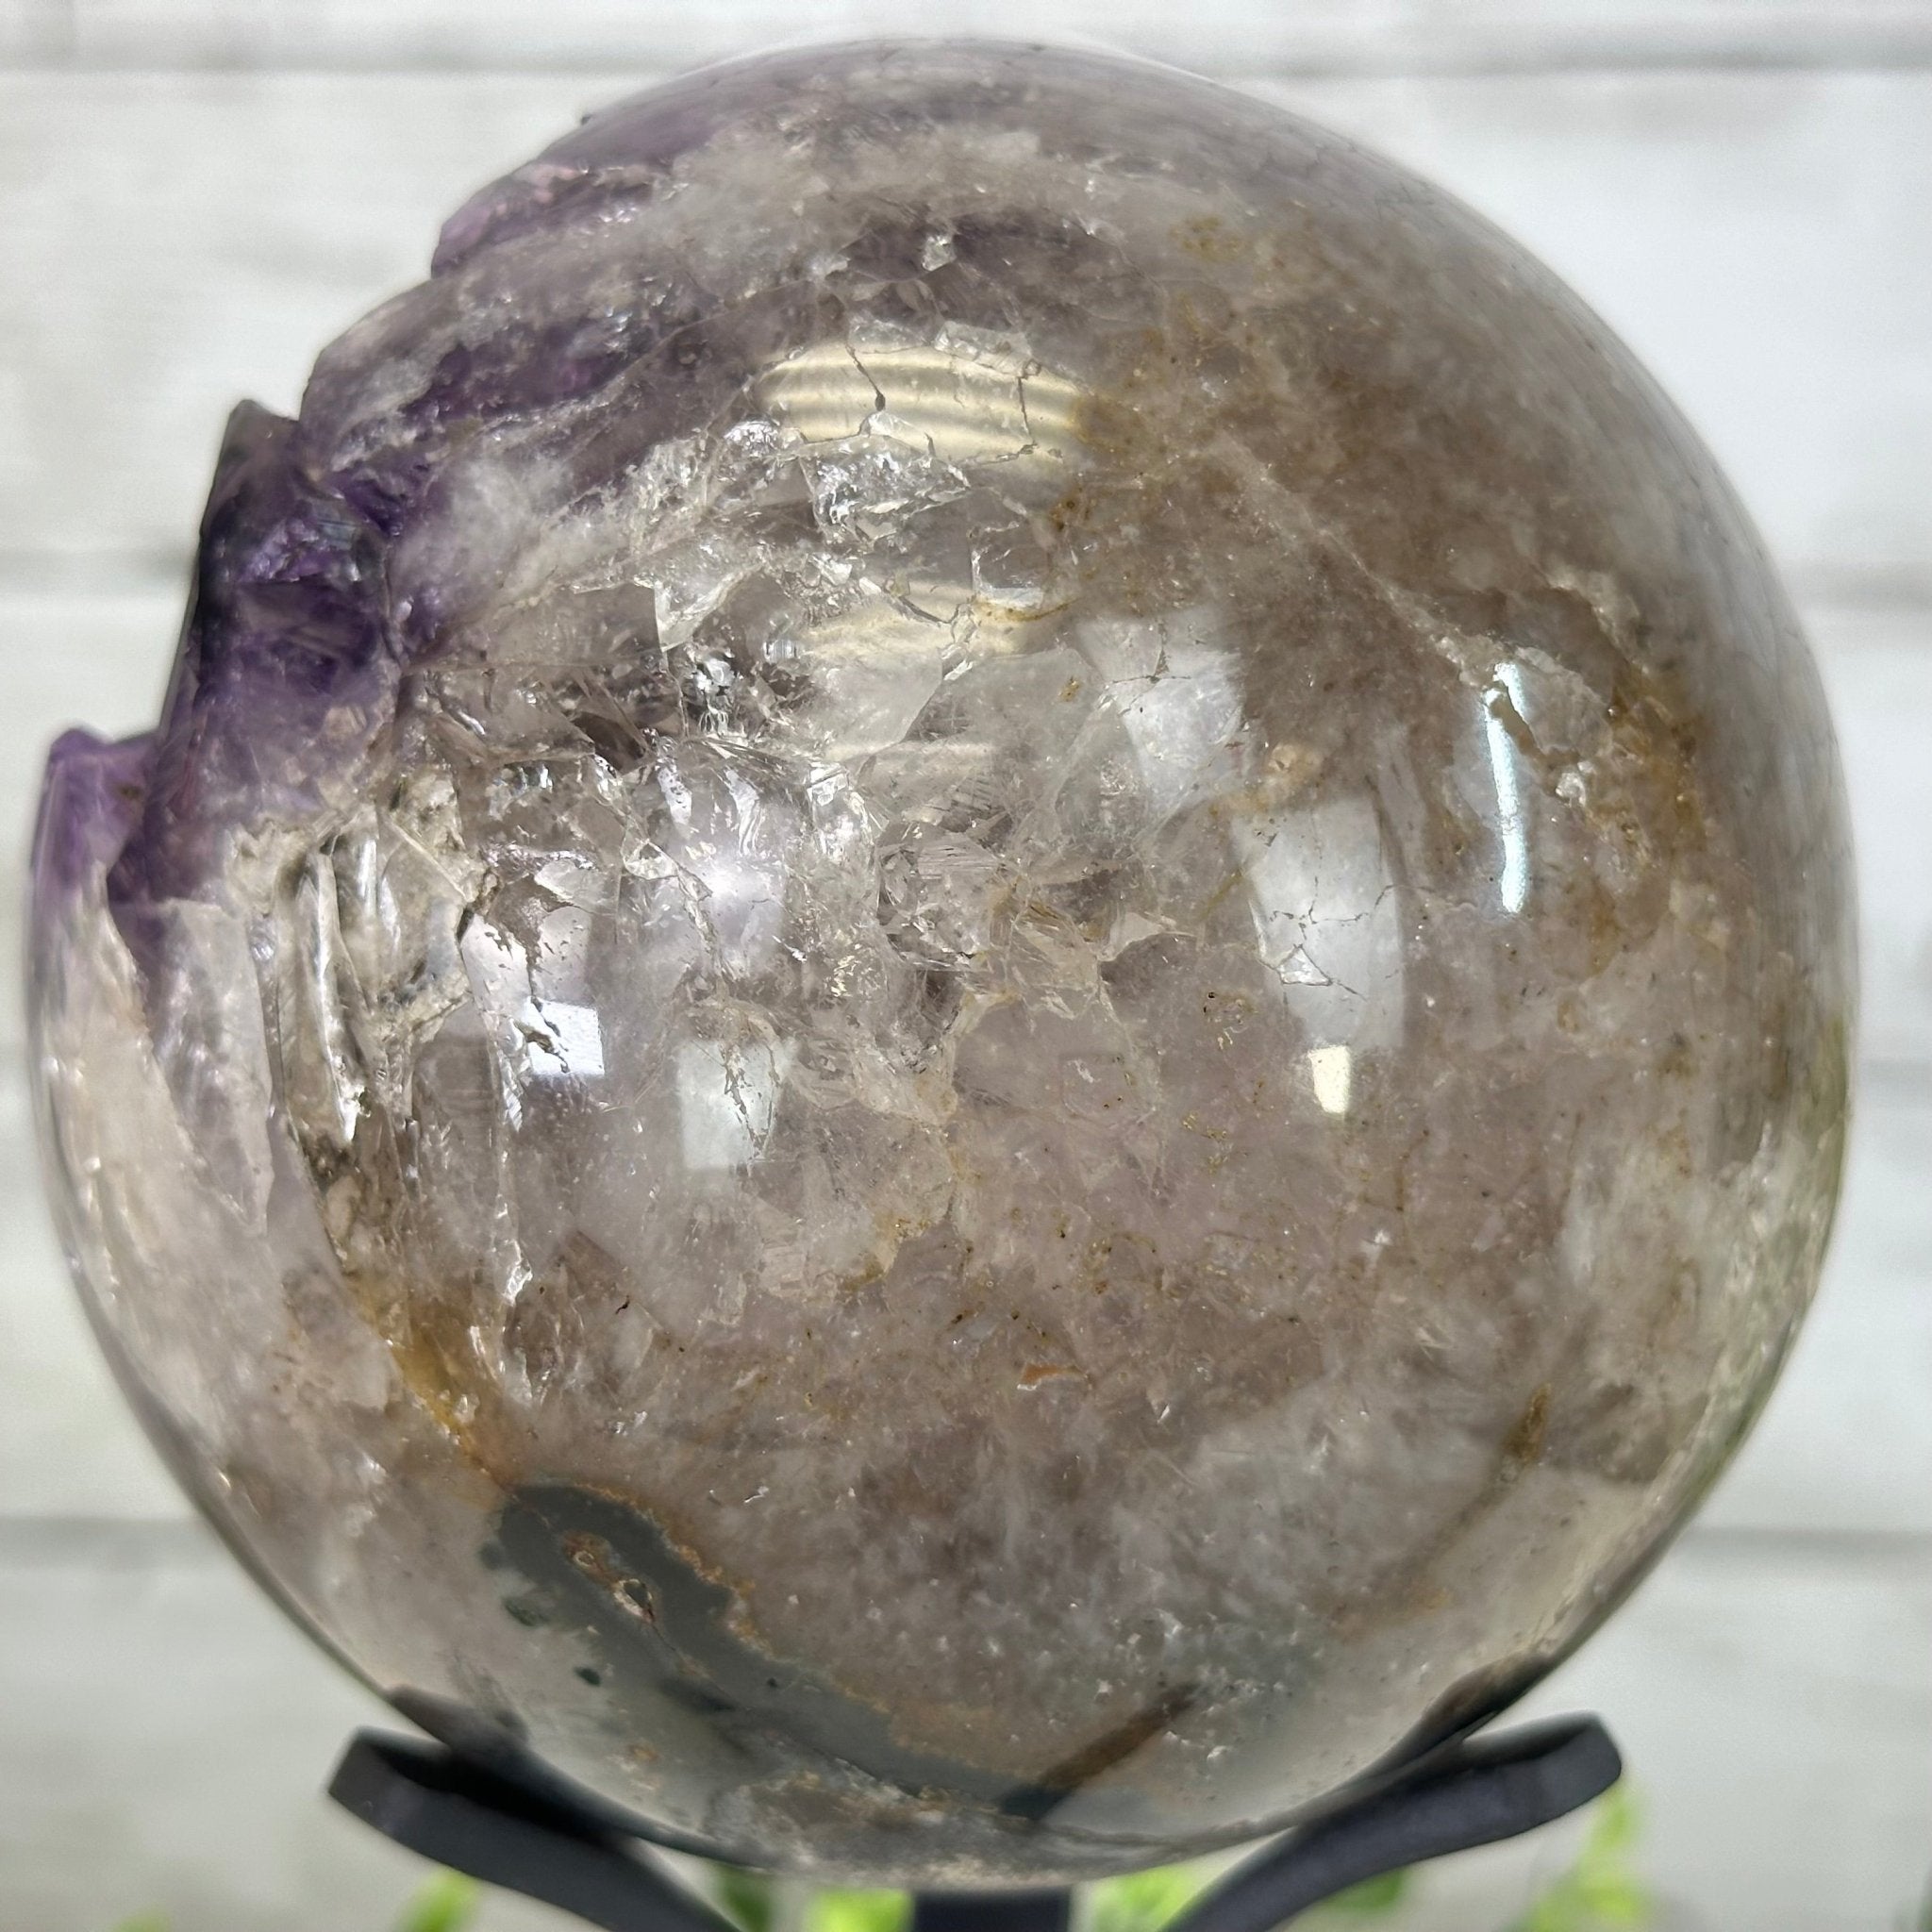 Extra Plus Druzy Amethyst Sphere on a Metal Stand, 4.4 lbs & 9" Tall #5630-0065 - Brazil GemsBrazil GemsExtra Plus Druzy Amethyst Sphere on a Metal Stand, 4.4 lbs & 9" Tall #5630-0065Spheres5630-0065